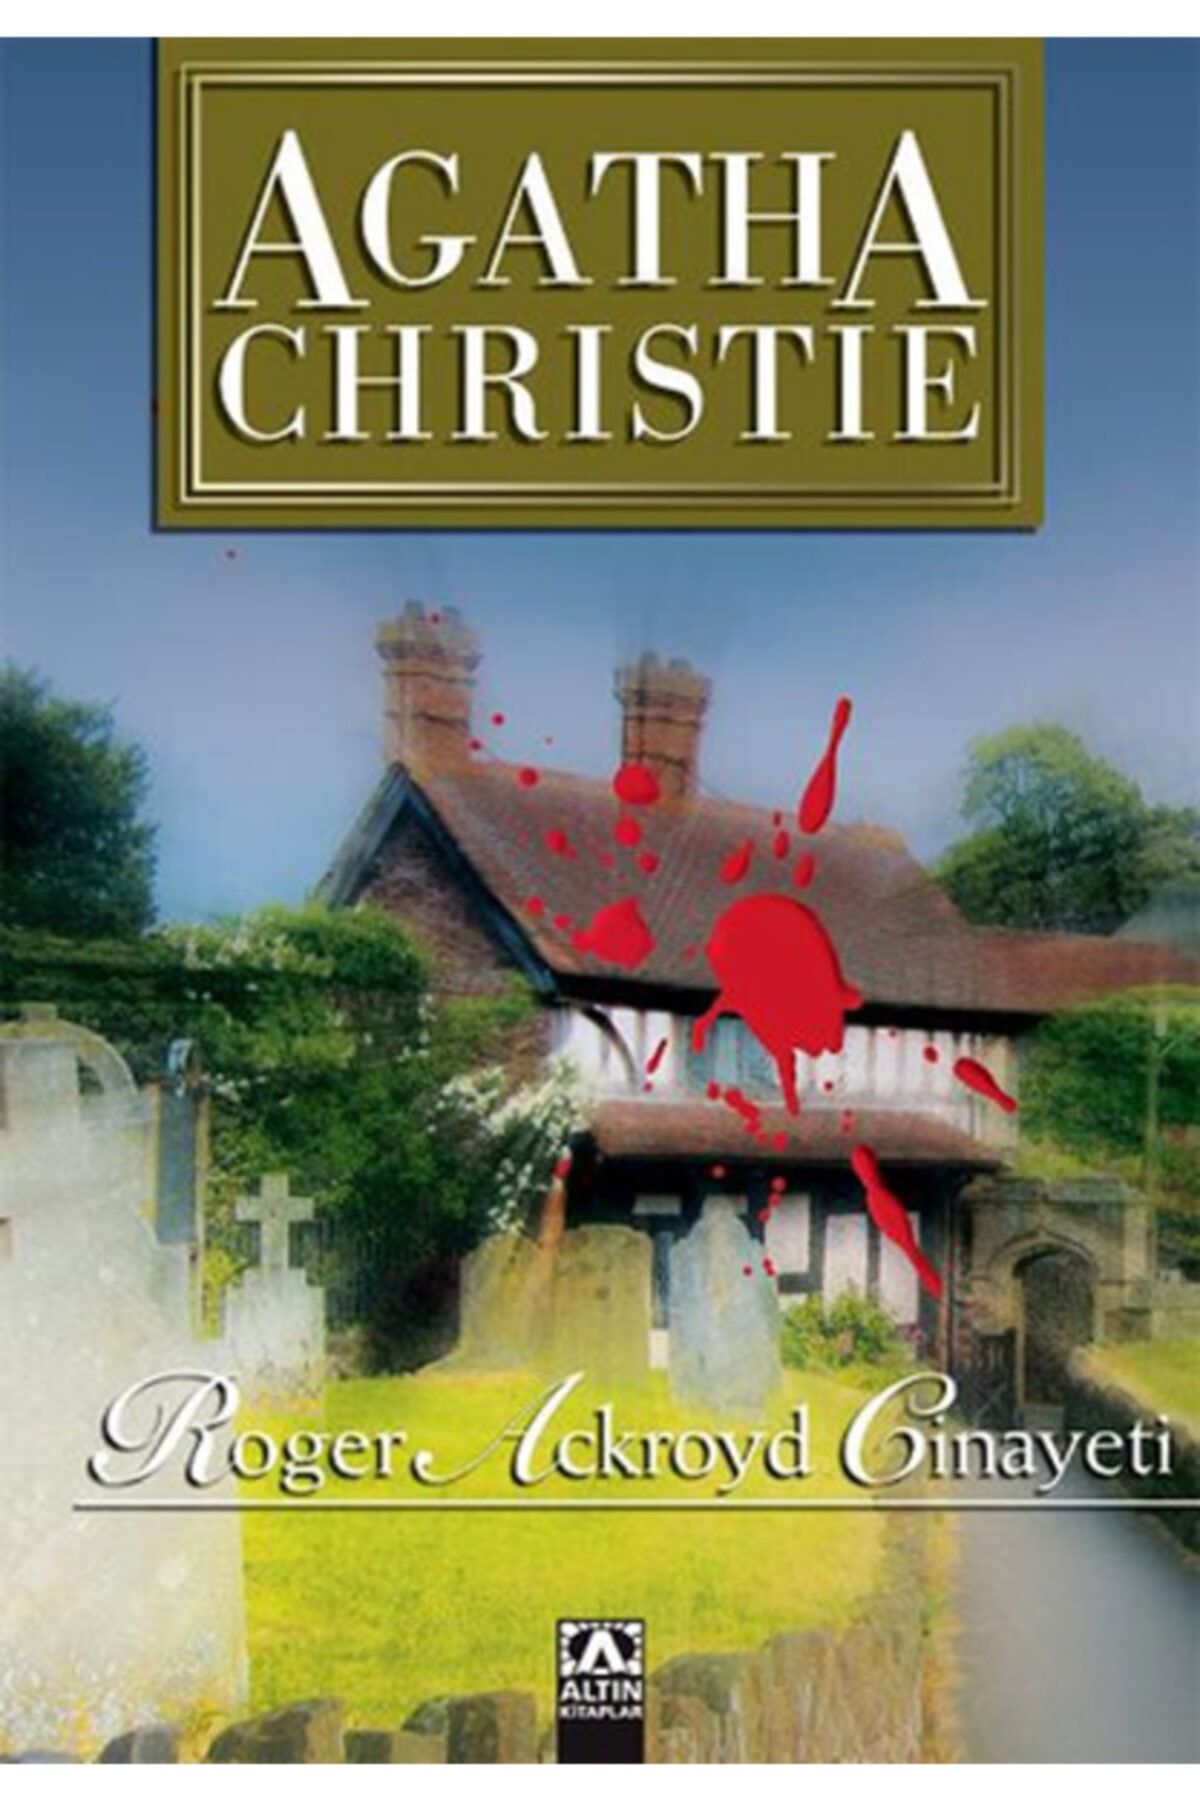 Altın Kitaplar Roger Ackroyd Cinayeti  Agatha Christie